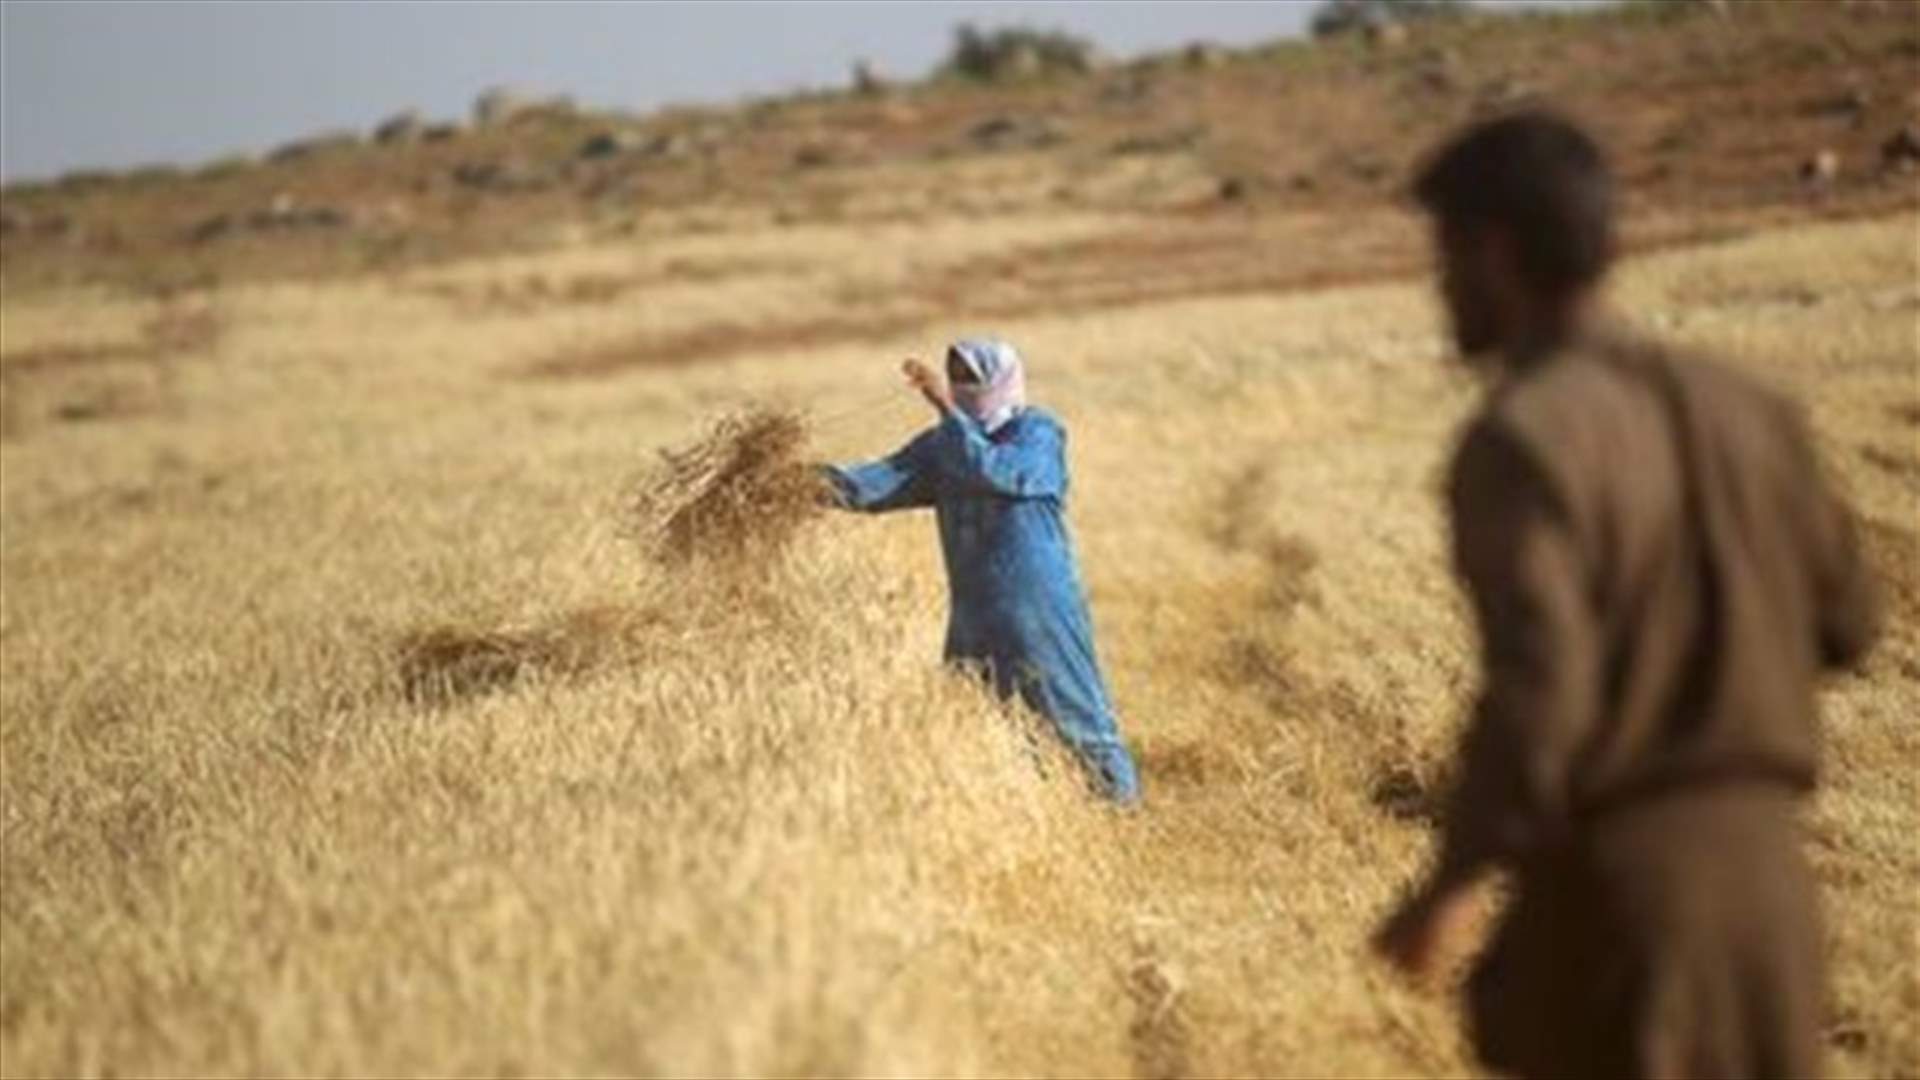 Syrian food crisis deepens as war chokes farming